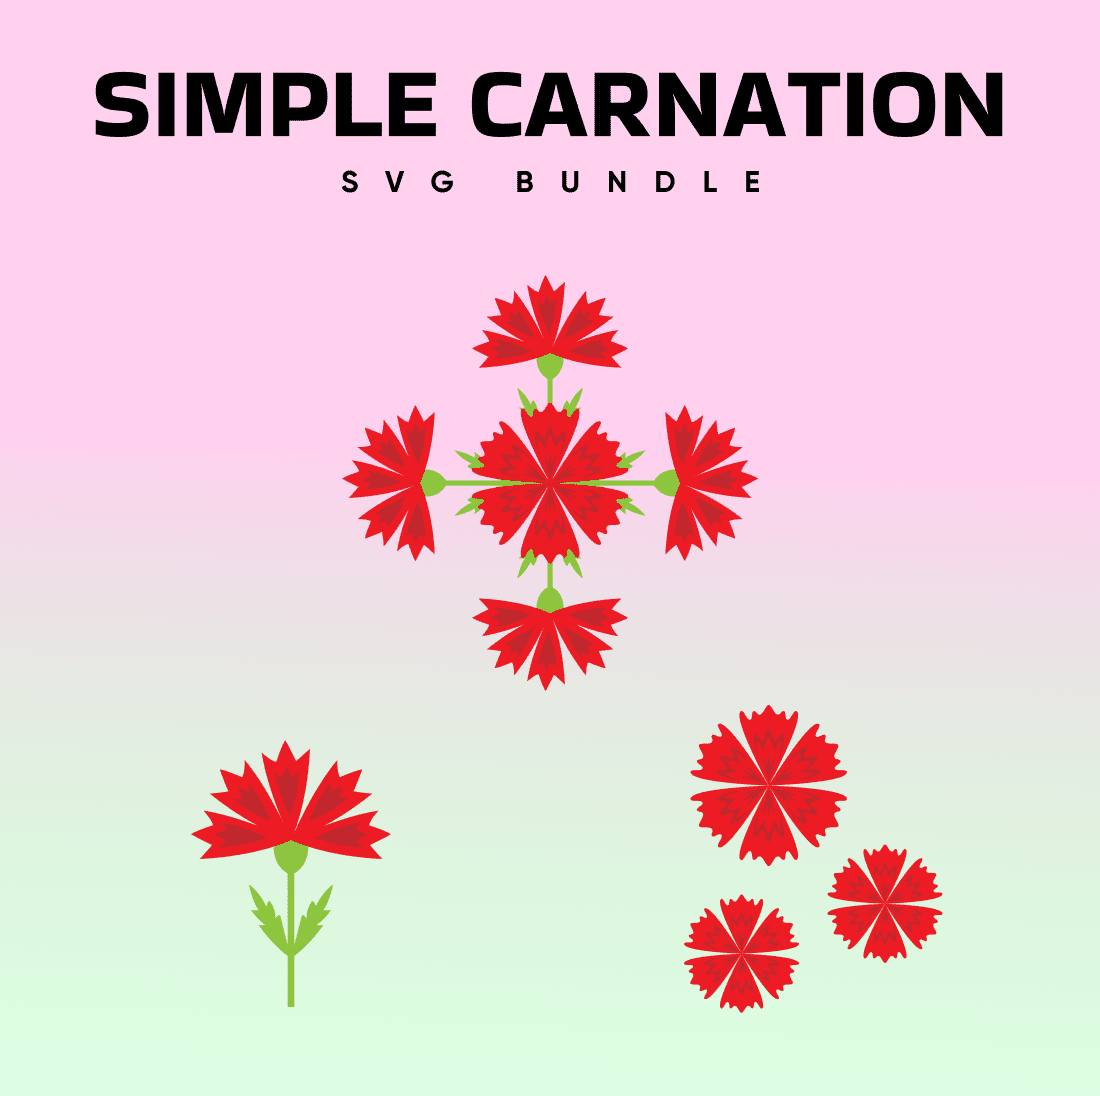 Simple Carnation SVG.